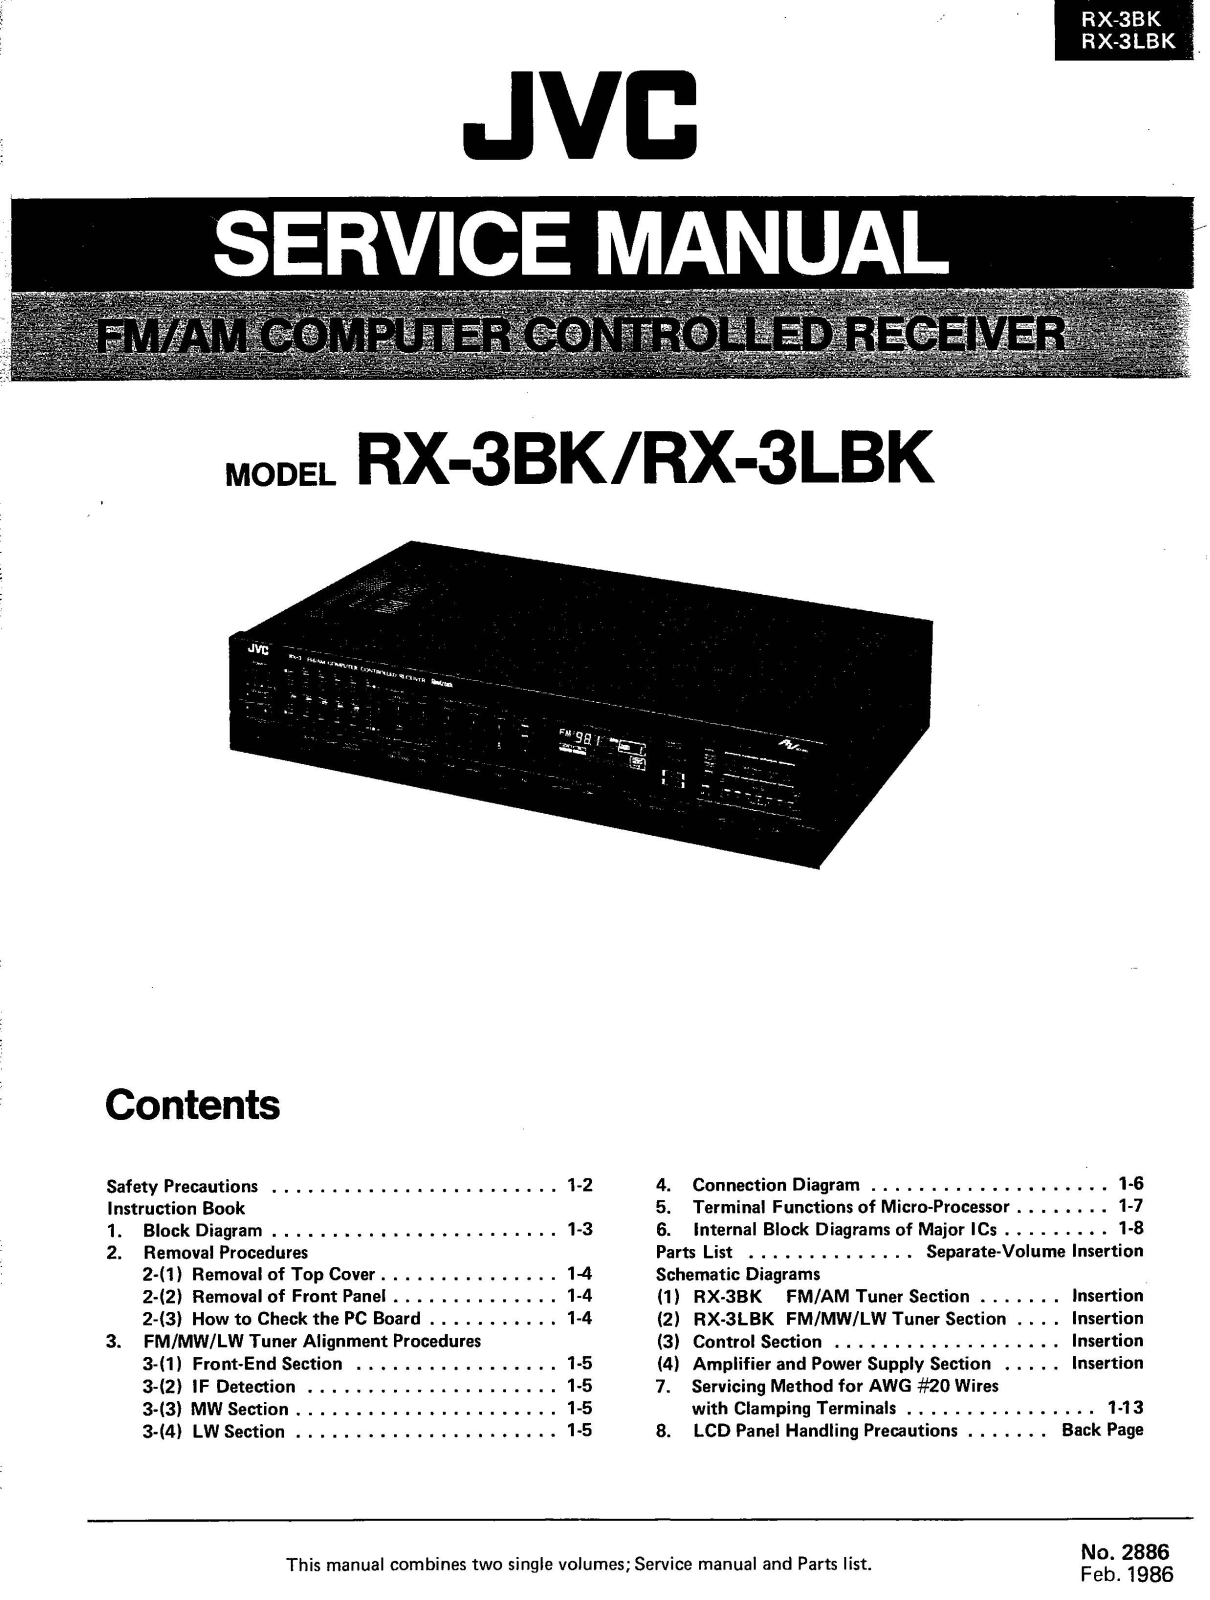 Jvc RX-3-BK, RX-3-LBK Service Manual